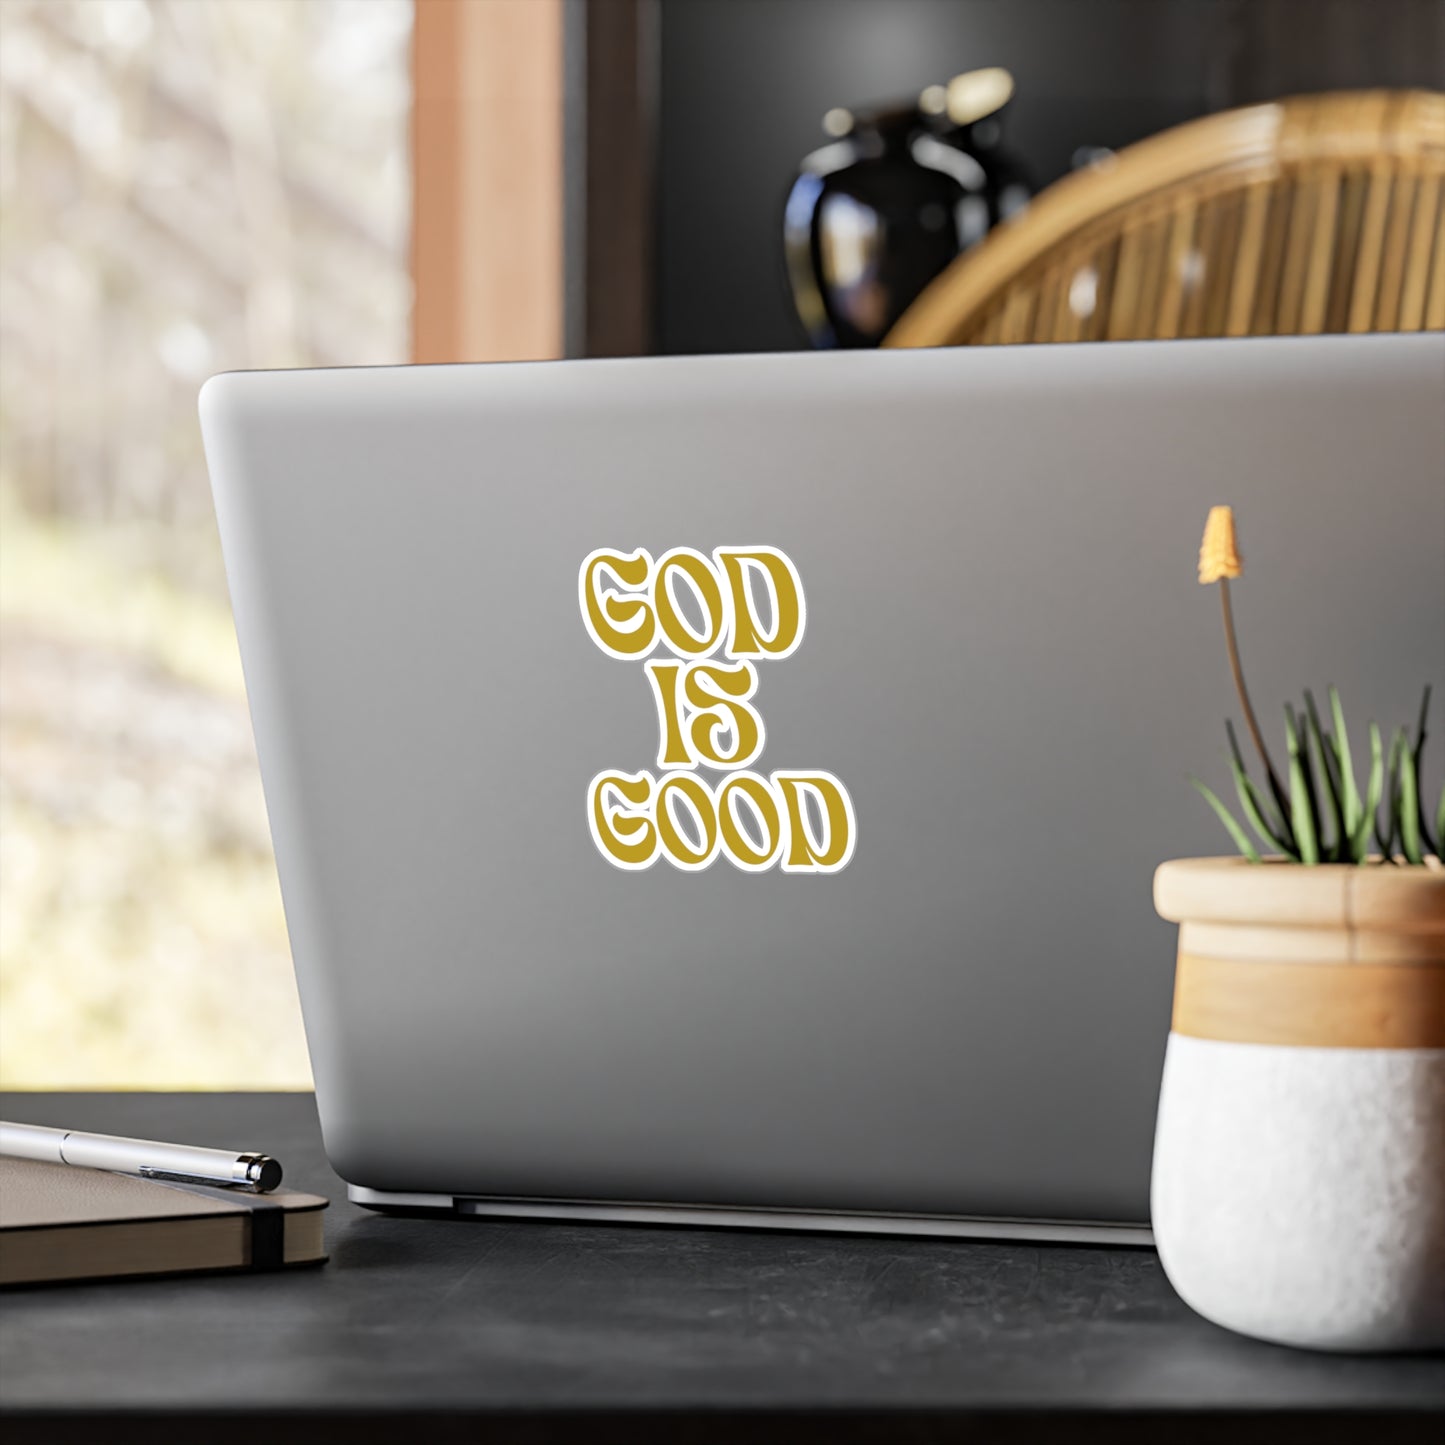 God Is Good - Sticker - Motivational Treats